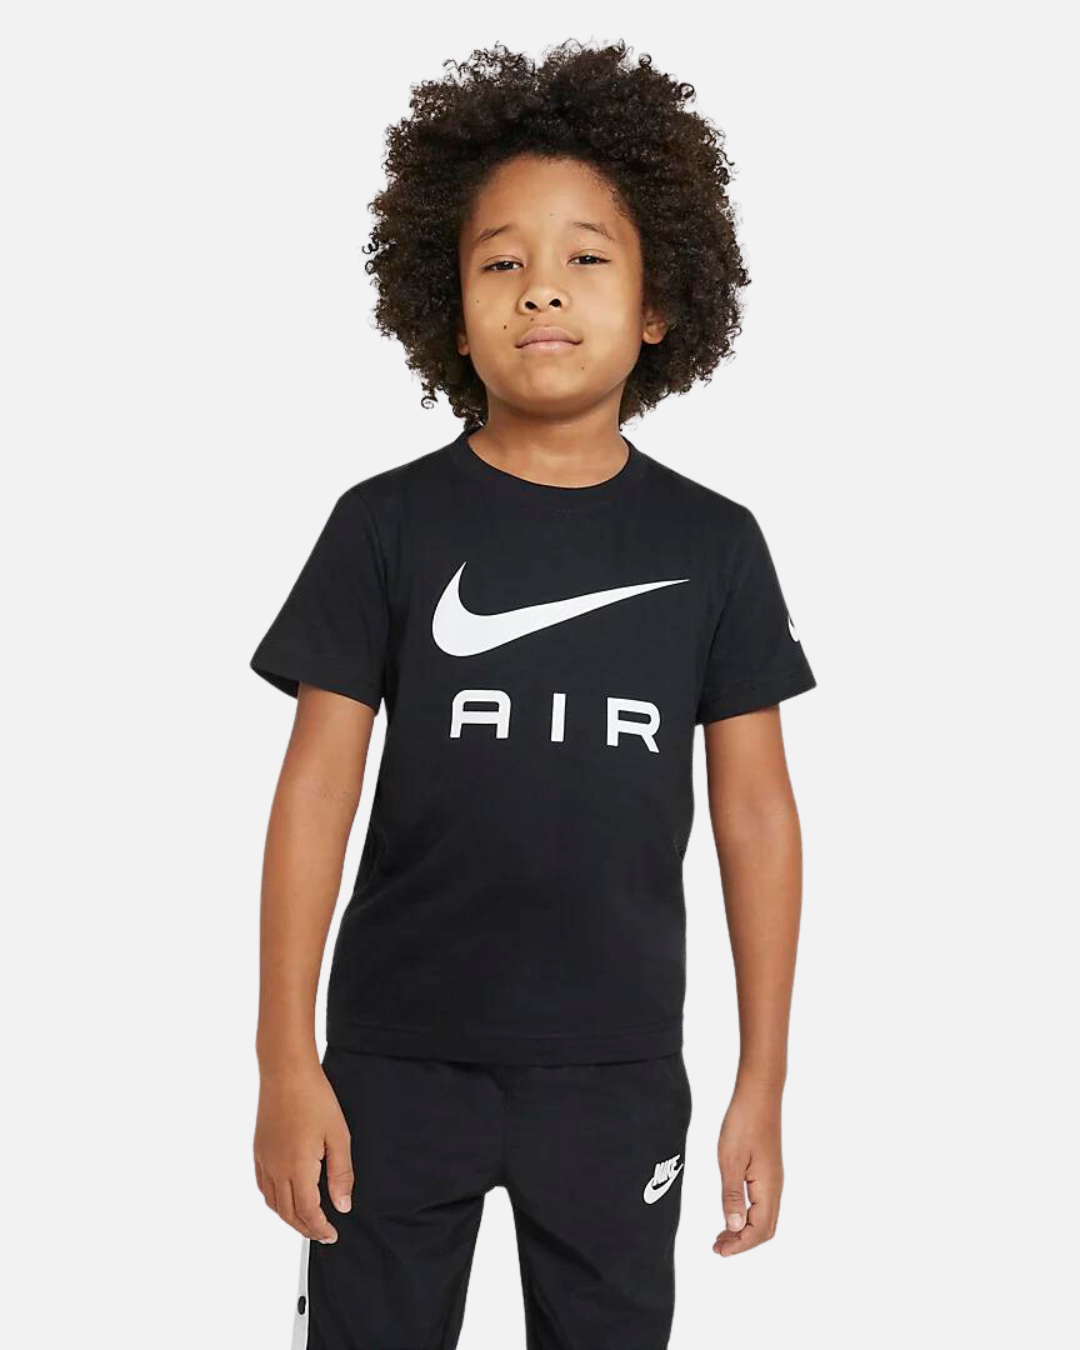 Camiseta Nike Air - Niño - Negro